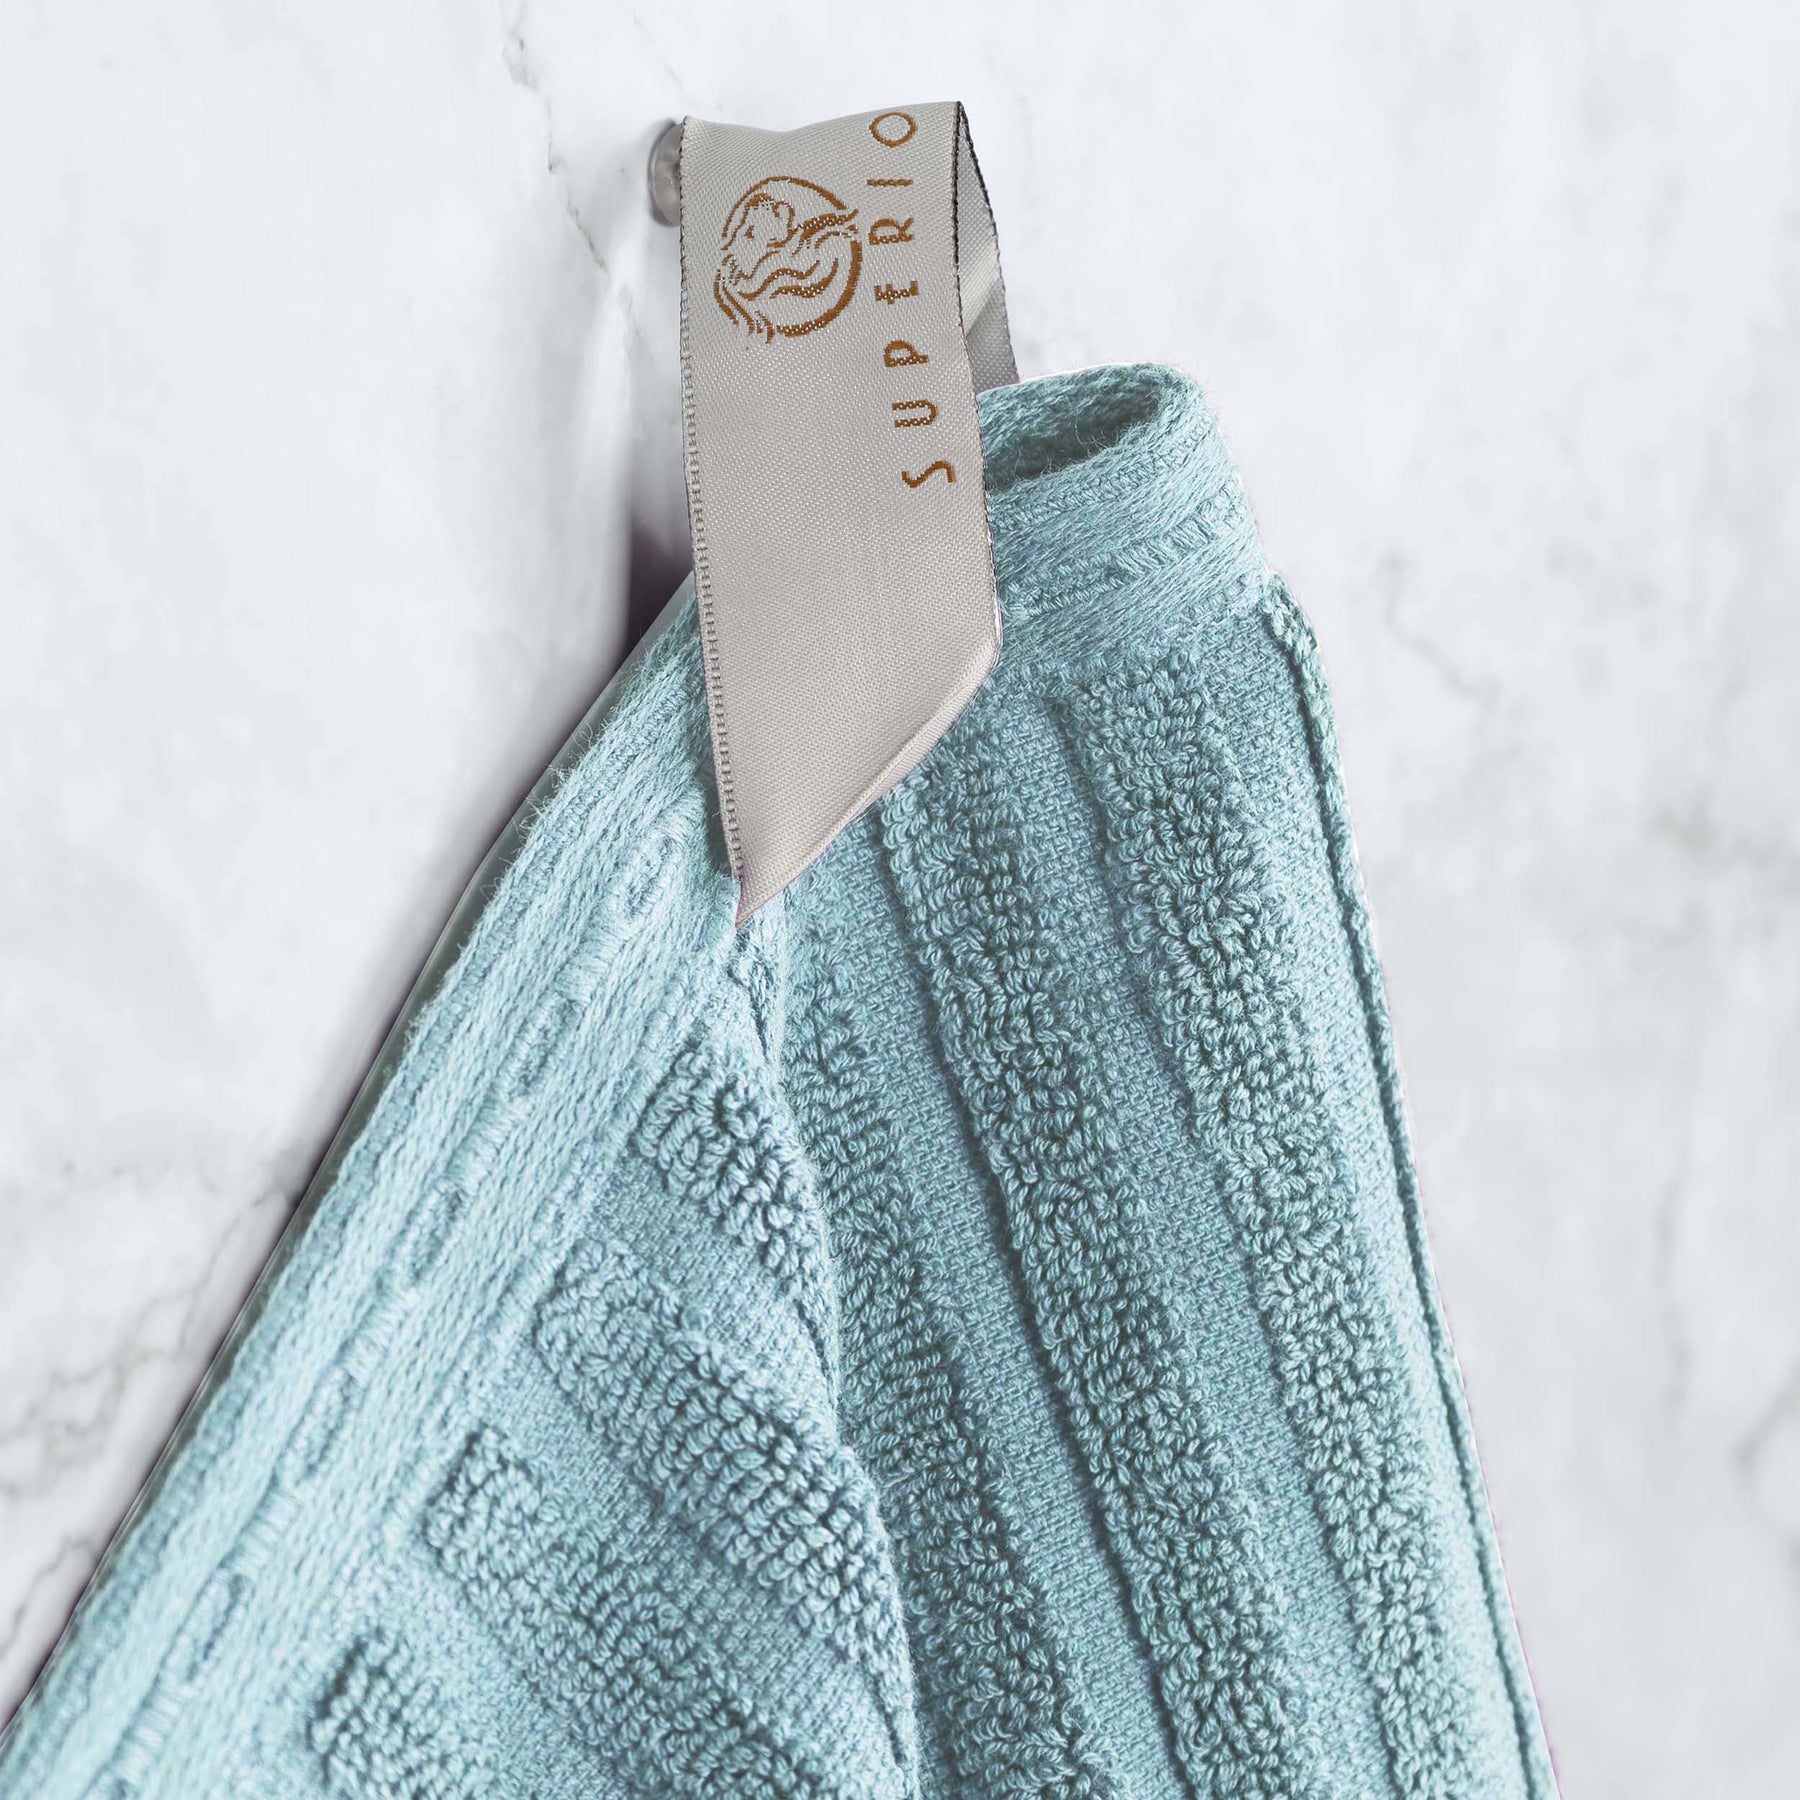 Ribbed Textured Cotton Bath Sheet Ultra-Absorbent Towel Set - Slate Blue